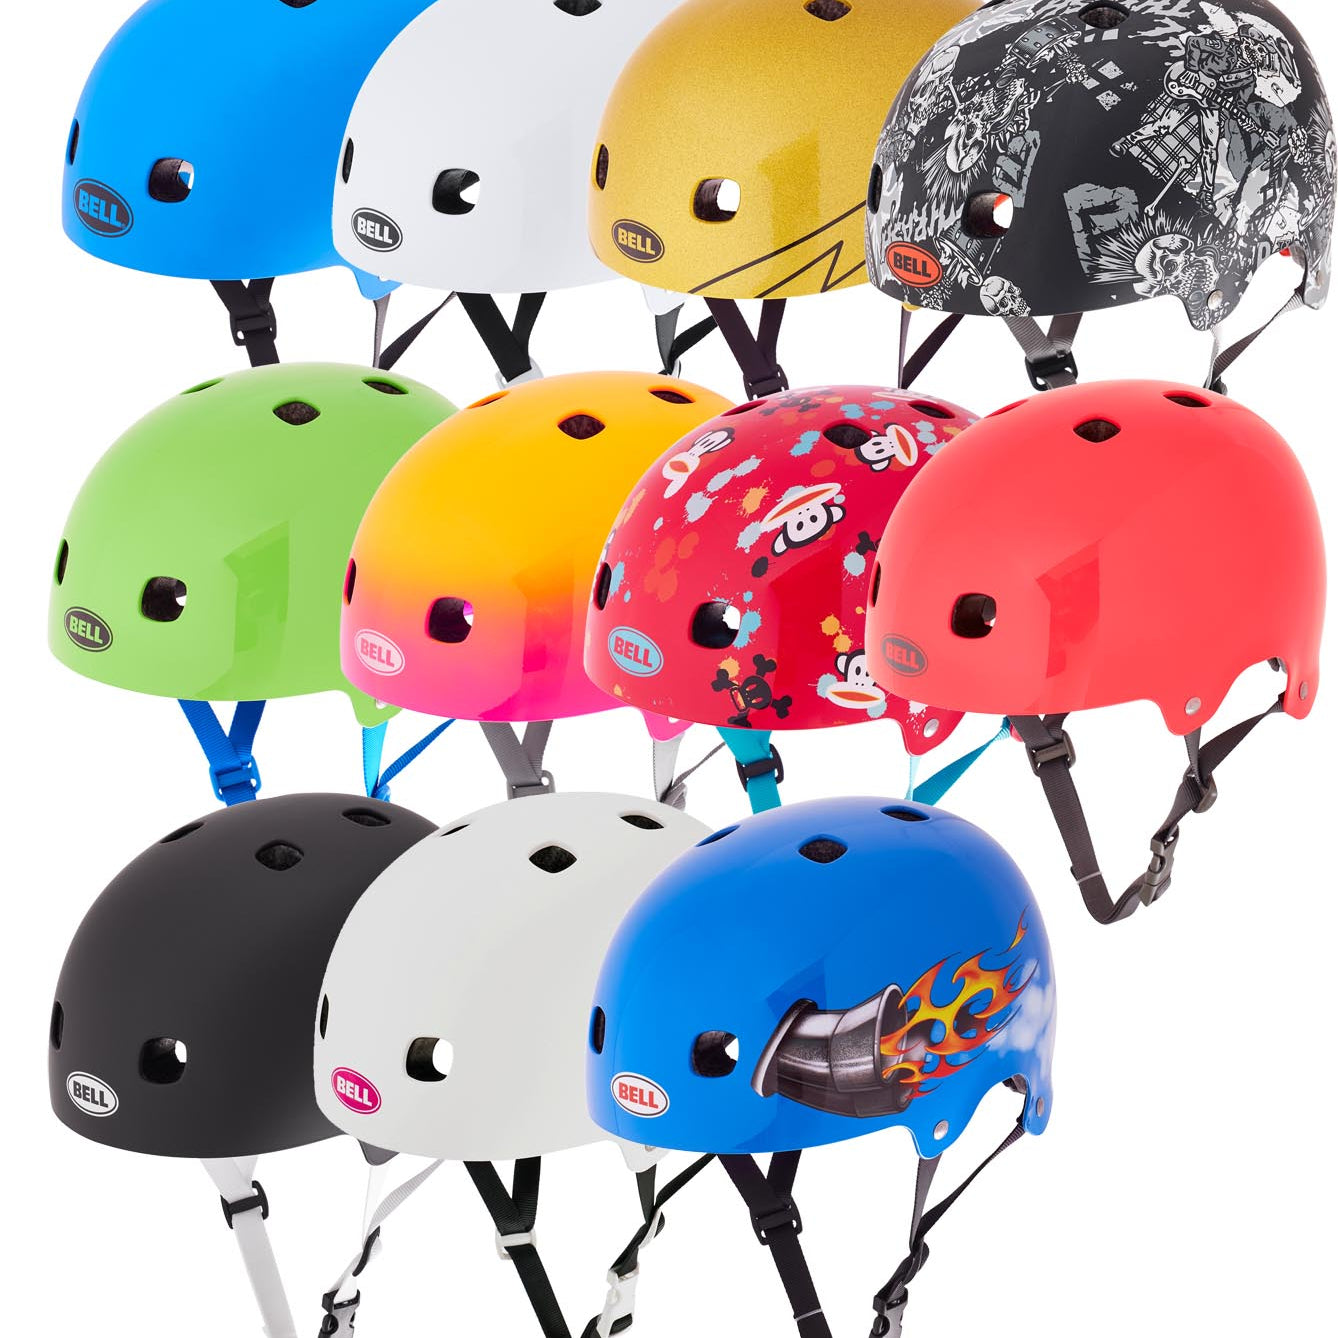 Bell Segment Fahrradhelm Radhelm Helm BMX MTB Inliner Skater Dirtbike